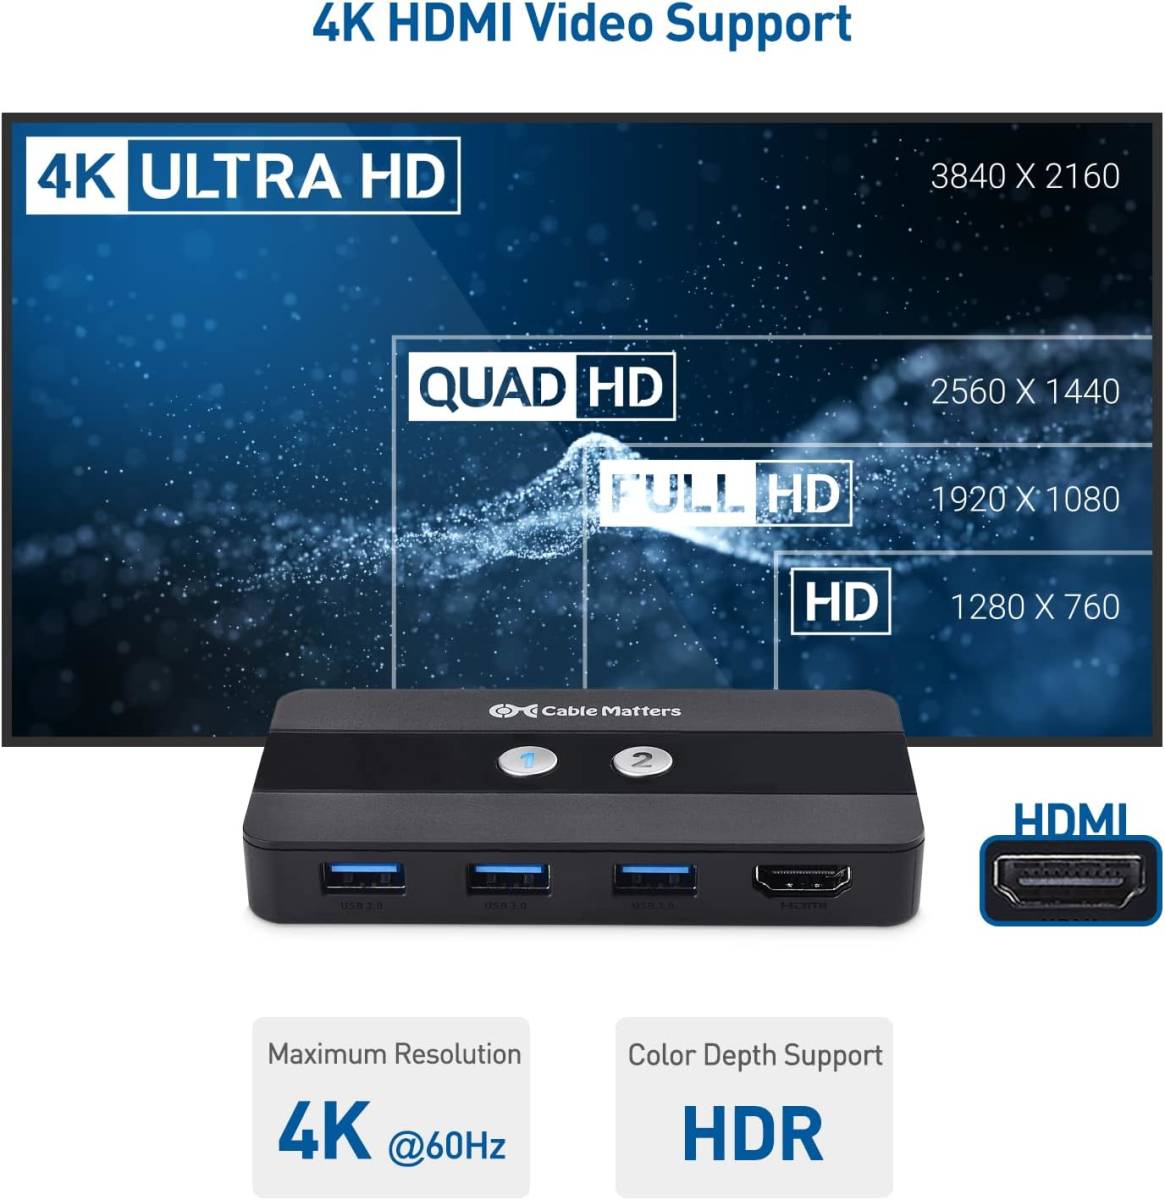 Cable Matters USB 3.0 KVM HDMI スイッチ 4K@60Hz HDMI ビデオ & 3X 5Gbps USBポートを備えた2台のコンピュータ用 HDMI KVM スイッチ_画像4